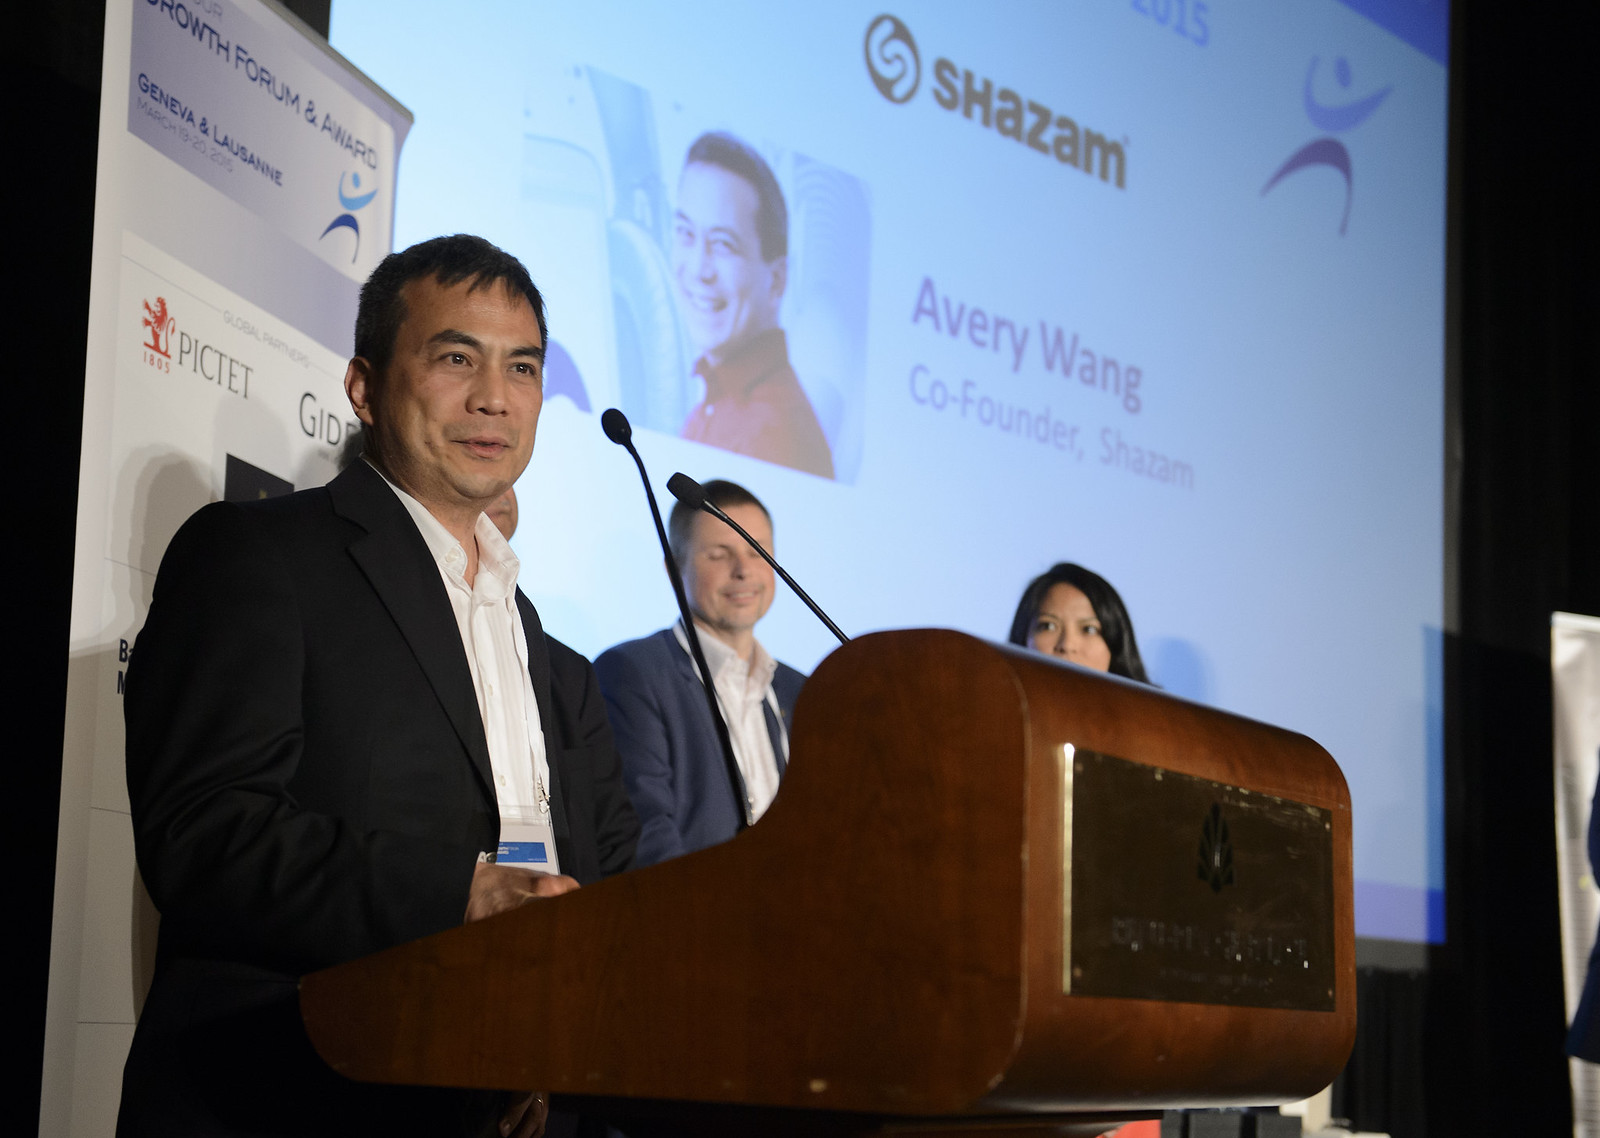 41 Avery Wang Winning Innovation Award